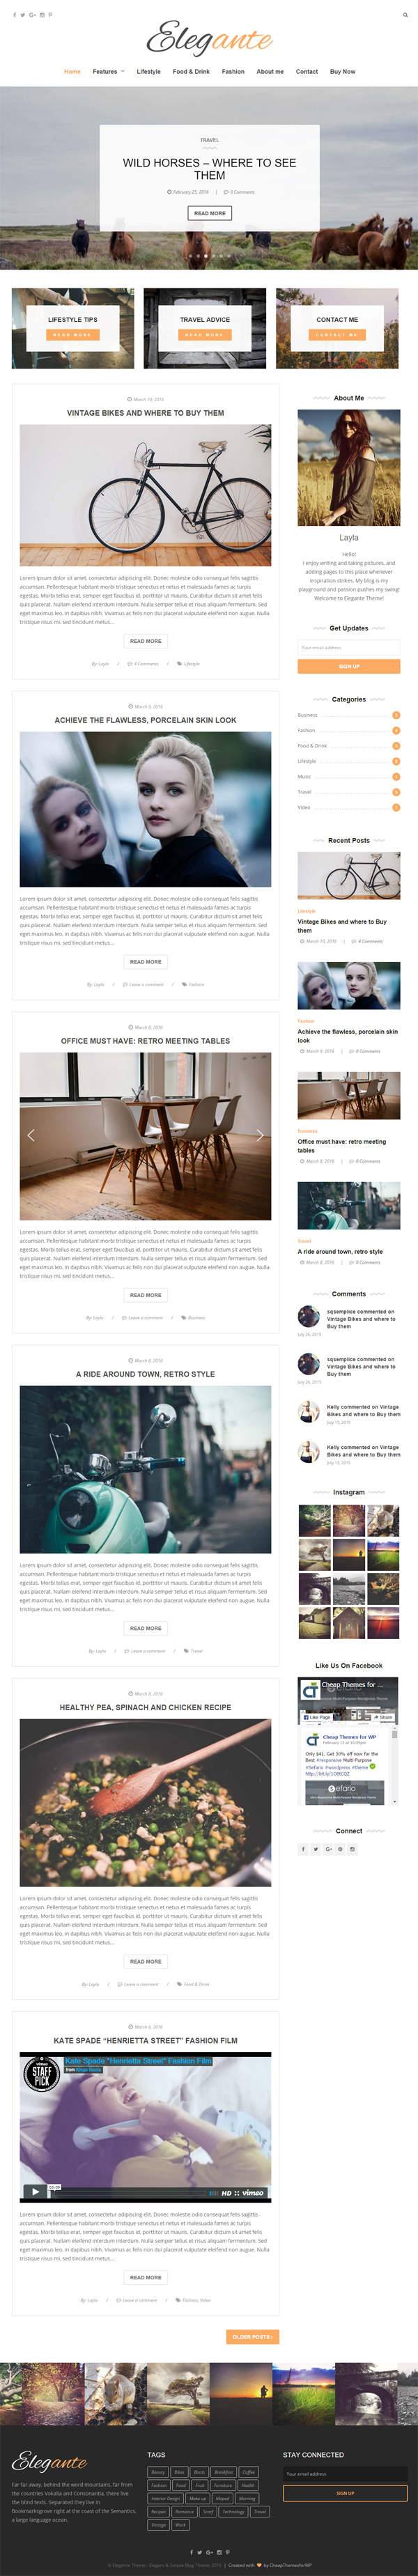 Elegante - Clean & Elegant WordPress Blog Theme